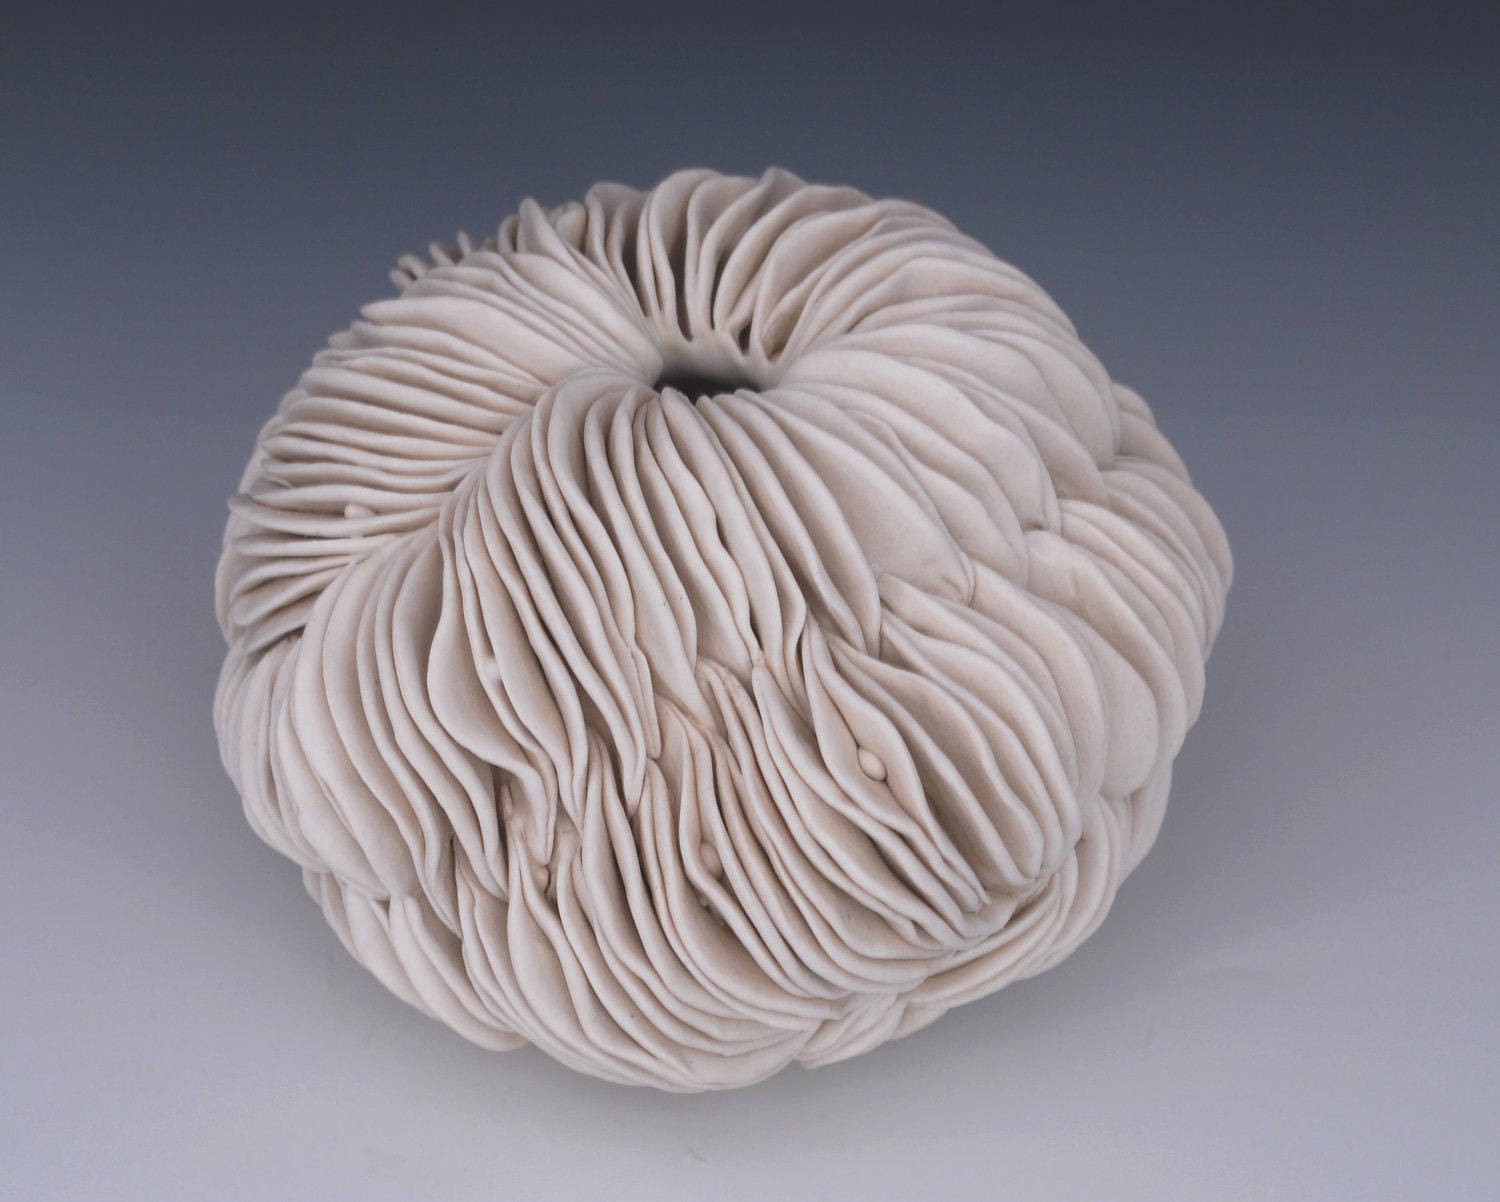 Textured Pottery Vase   White Ceramics Sculpture